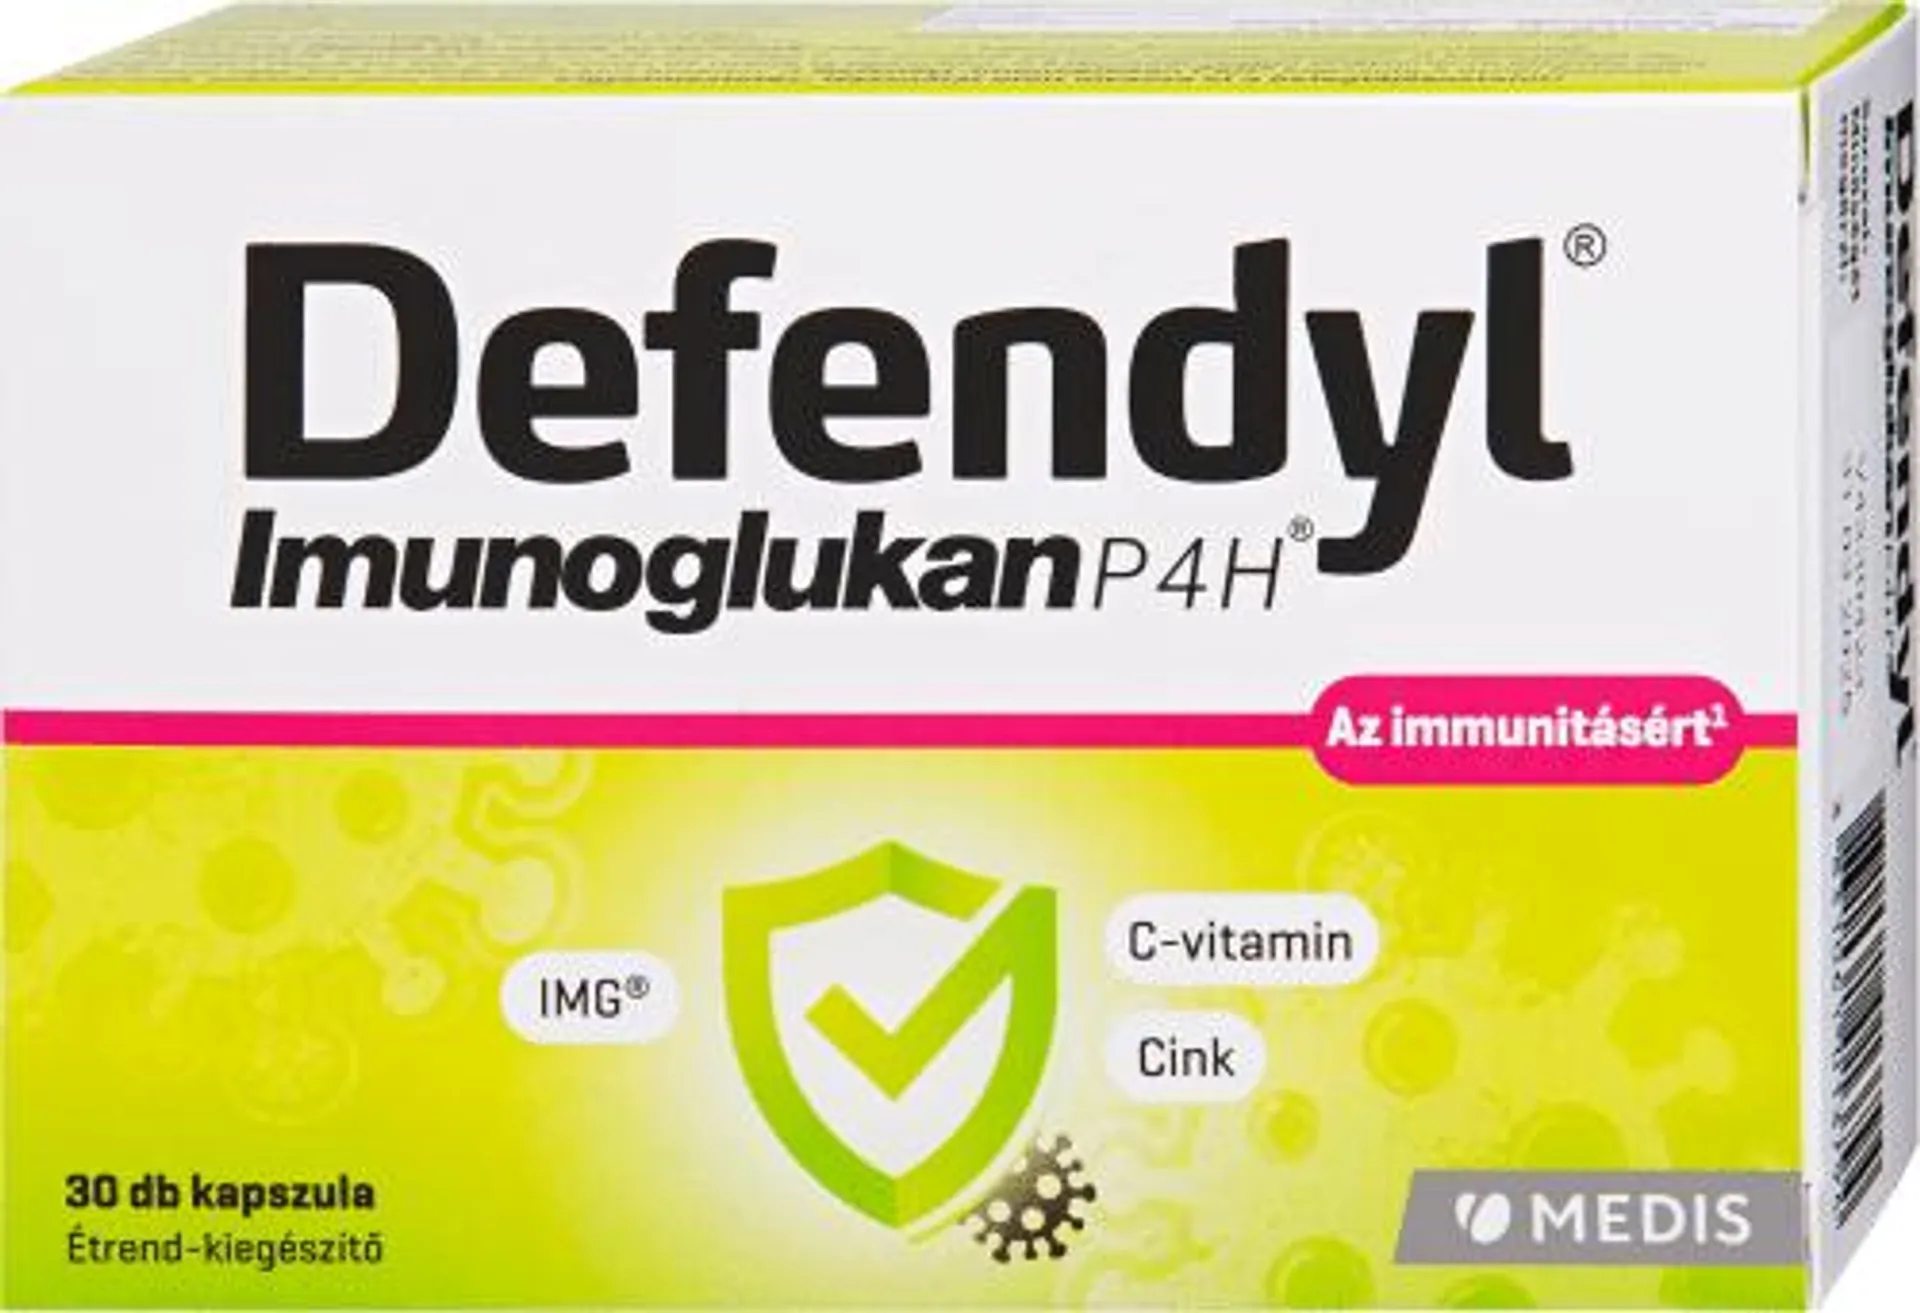 Defendyl Imunoglokan P4H C-vitamin, Cink kapszula, 30 db